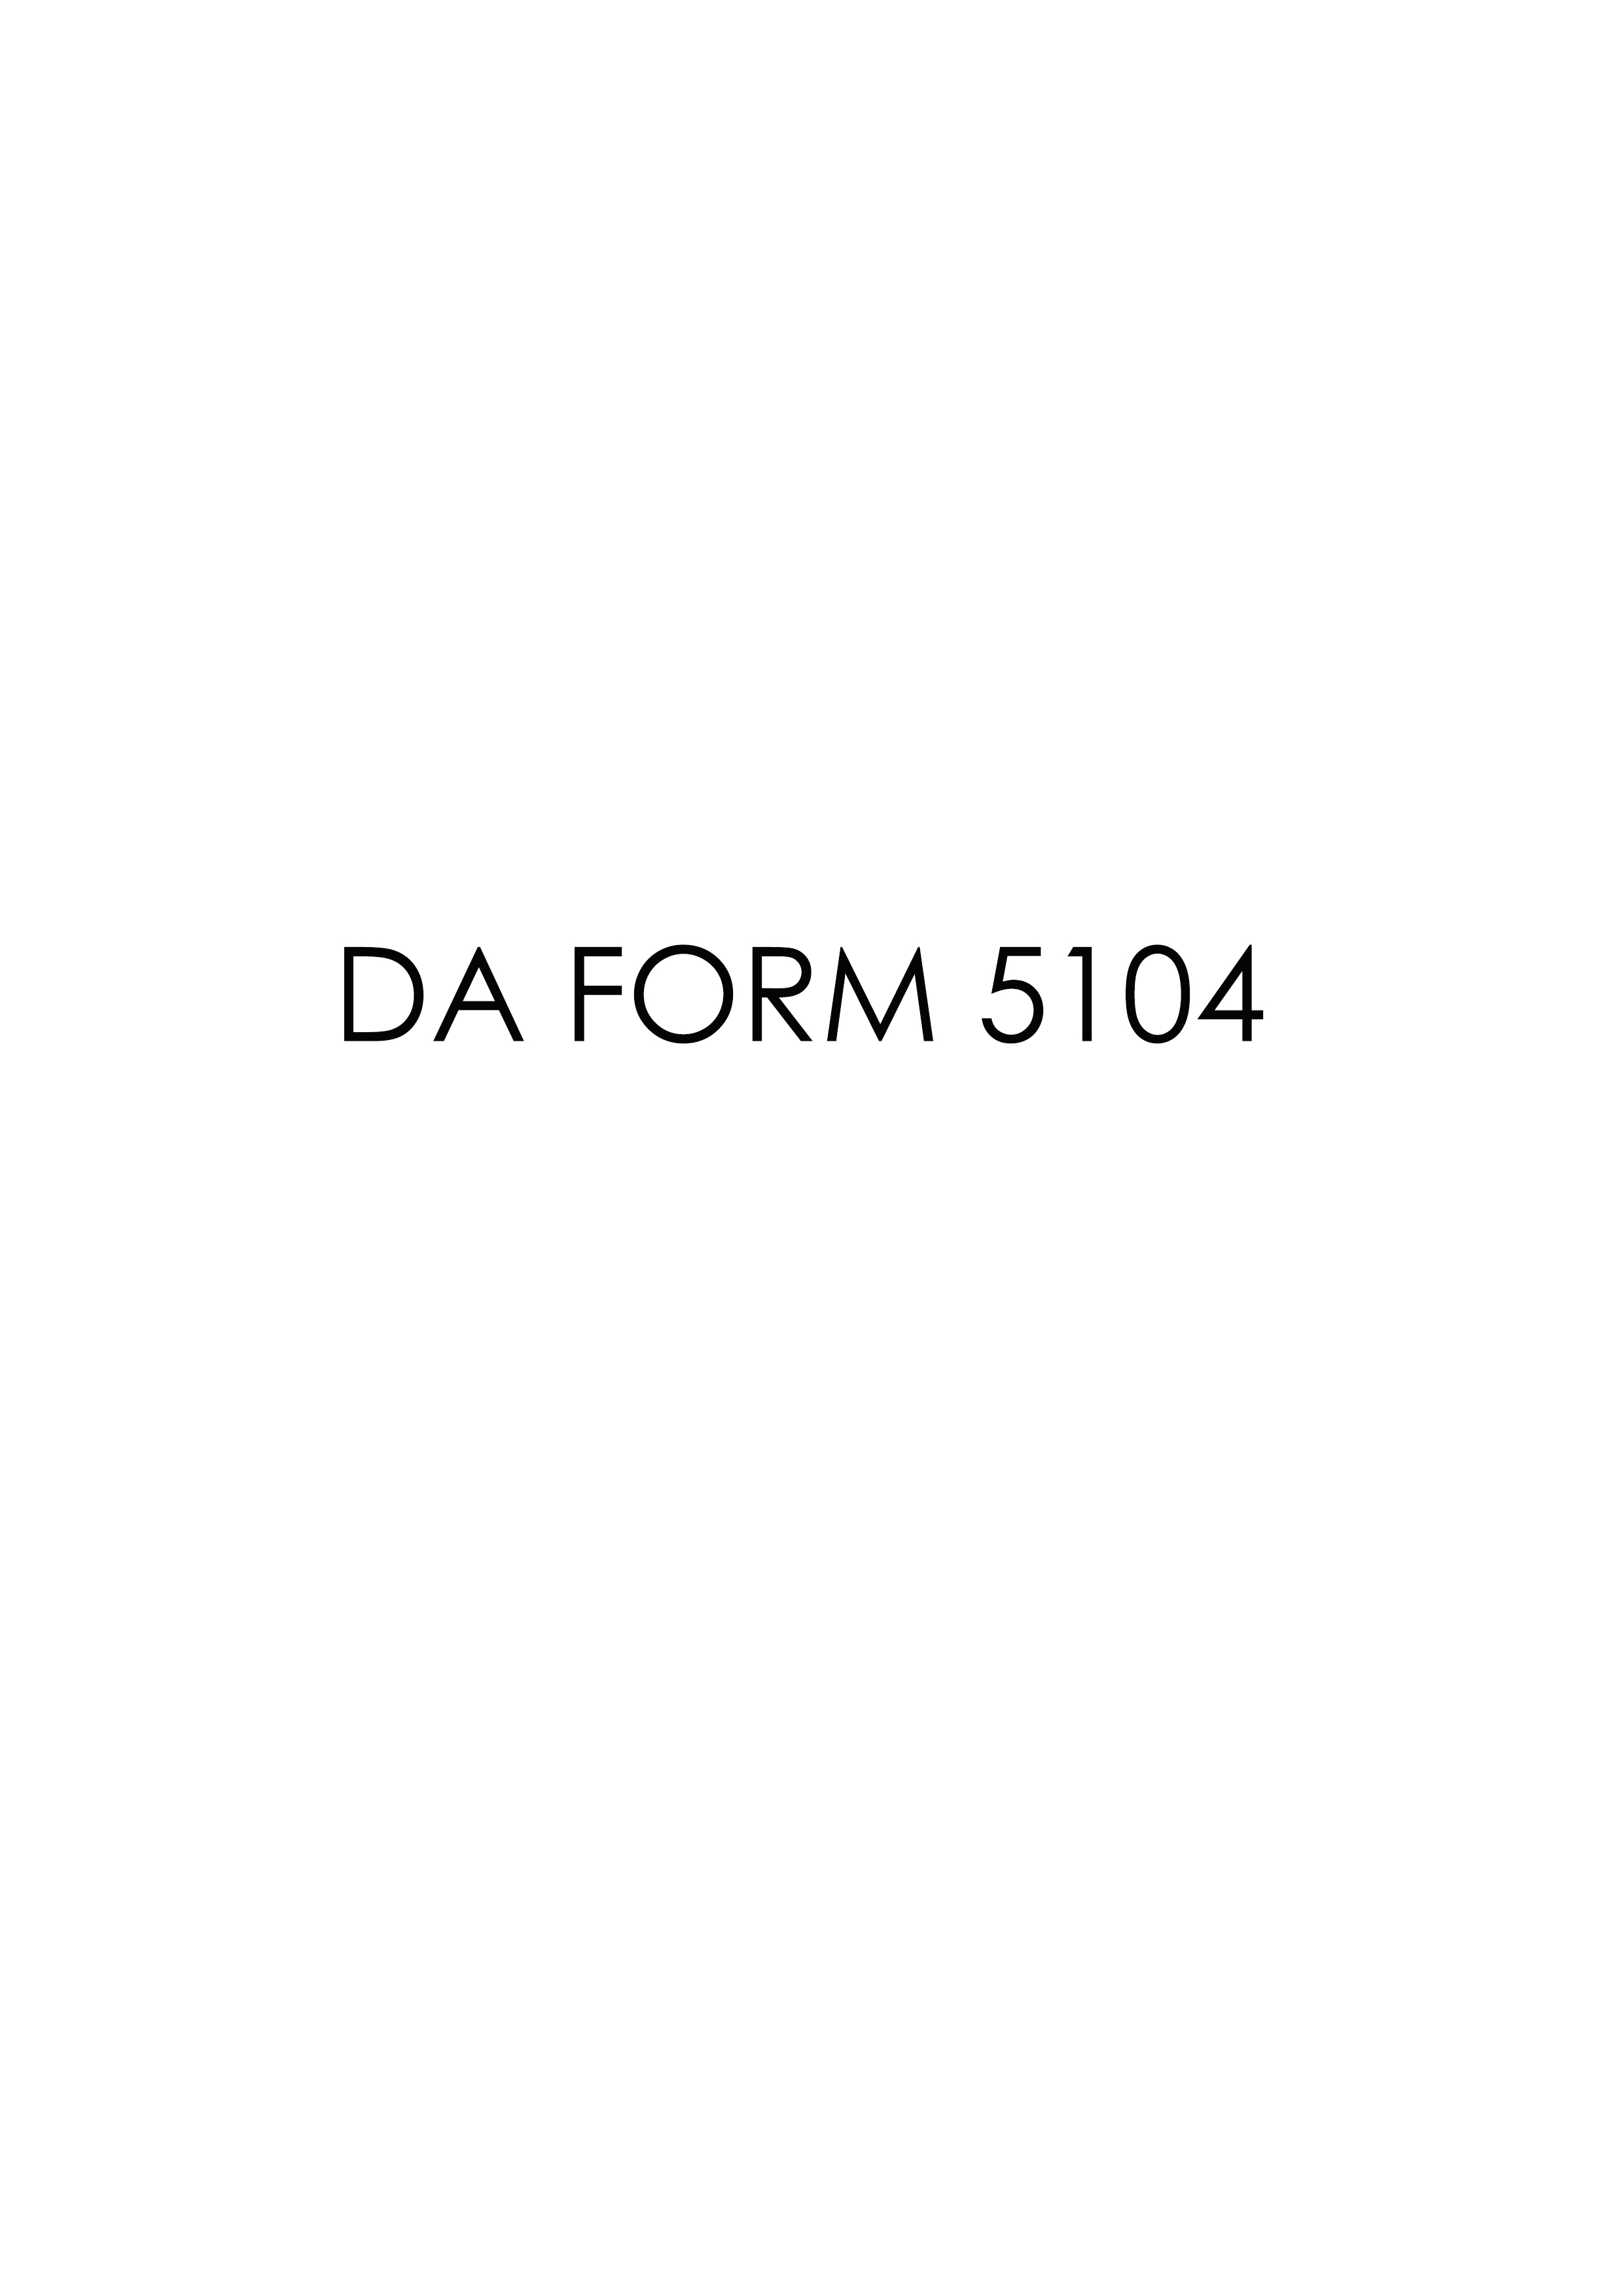 da Form 5104 fillable